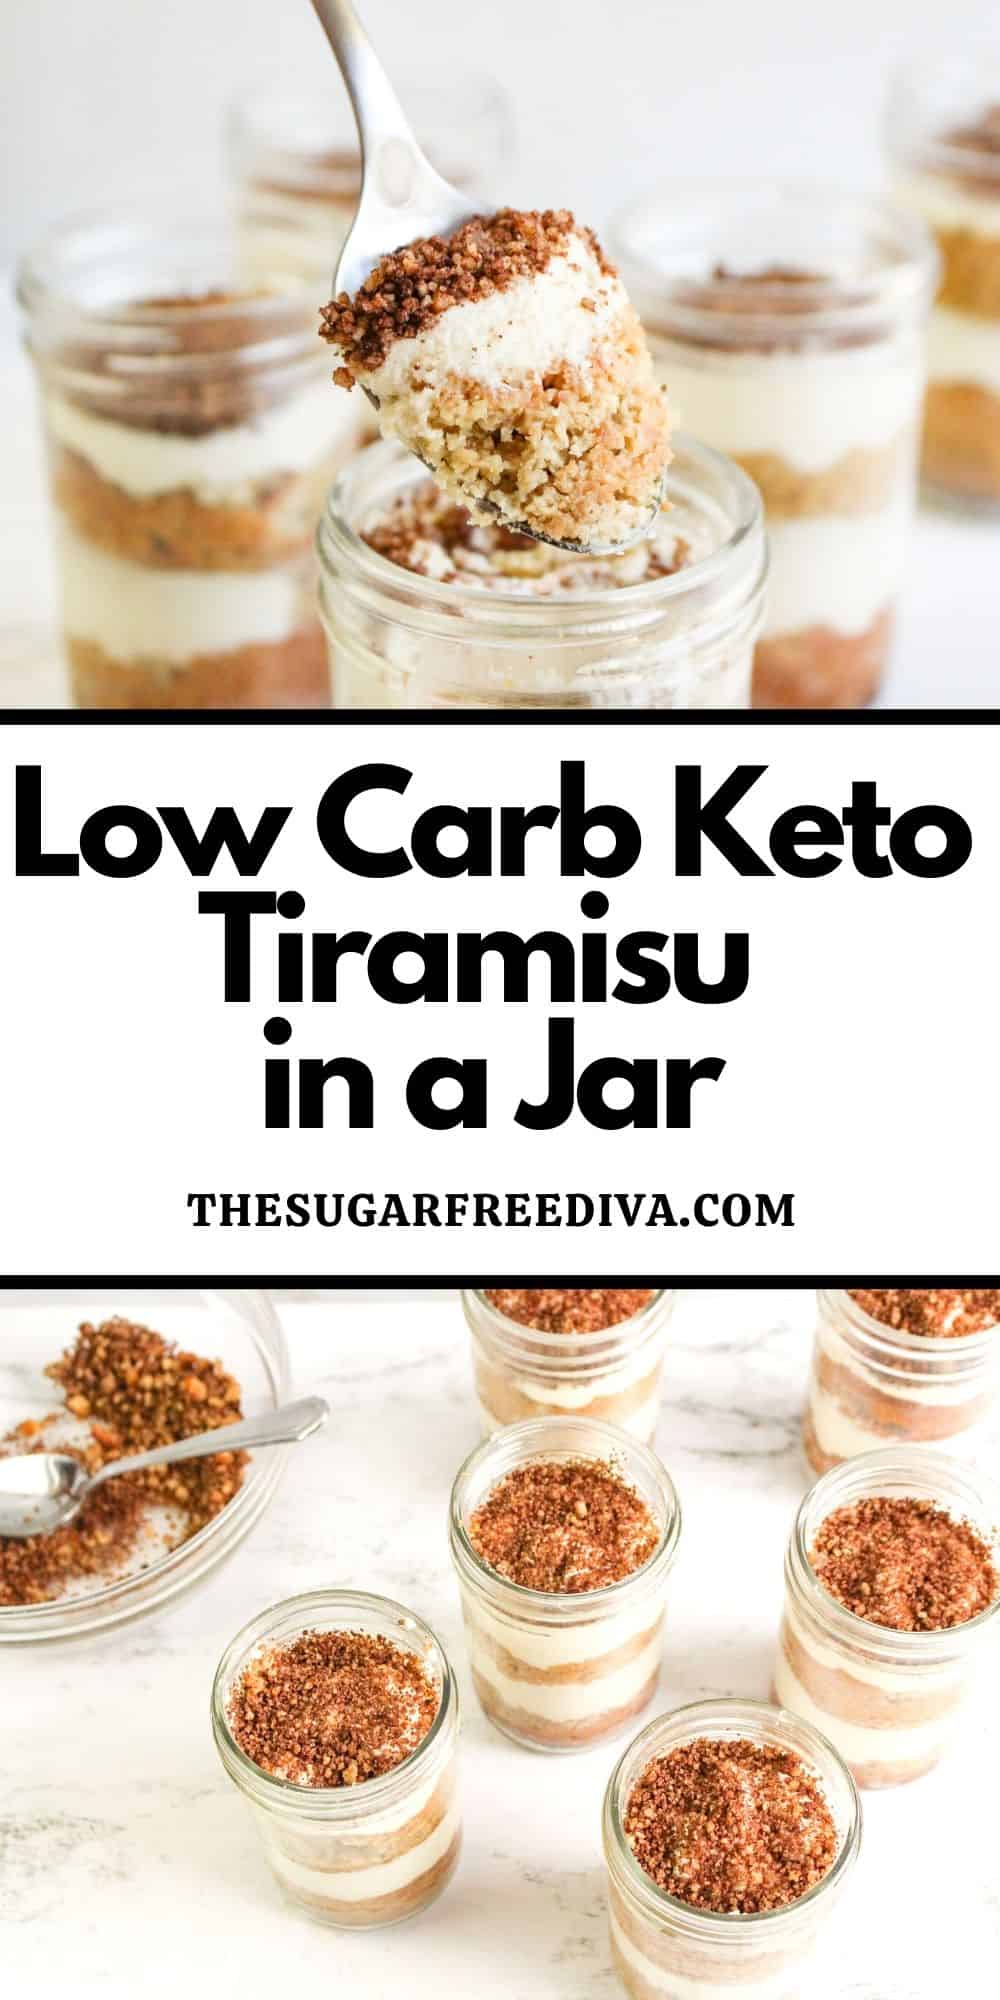 Low Carb Keto Tiramisu in a Jar